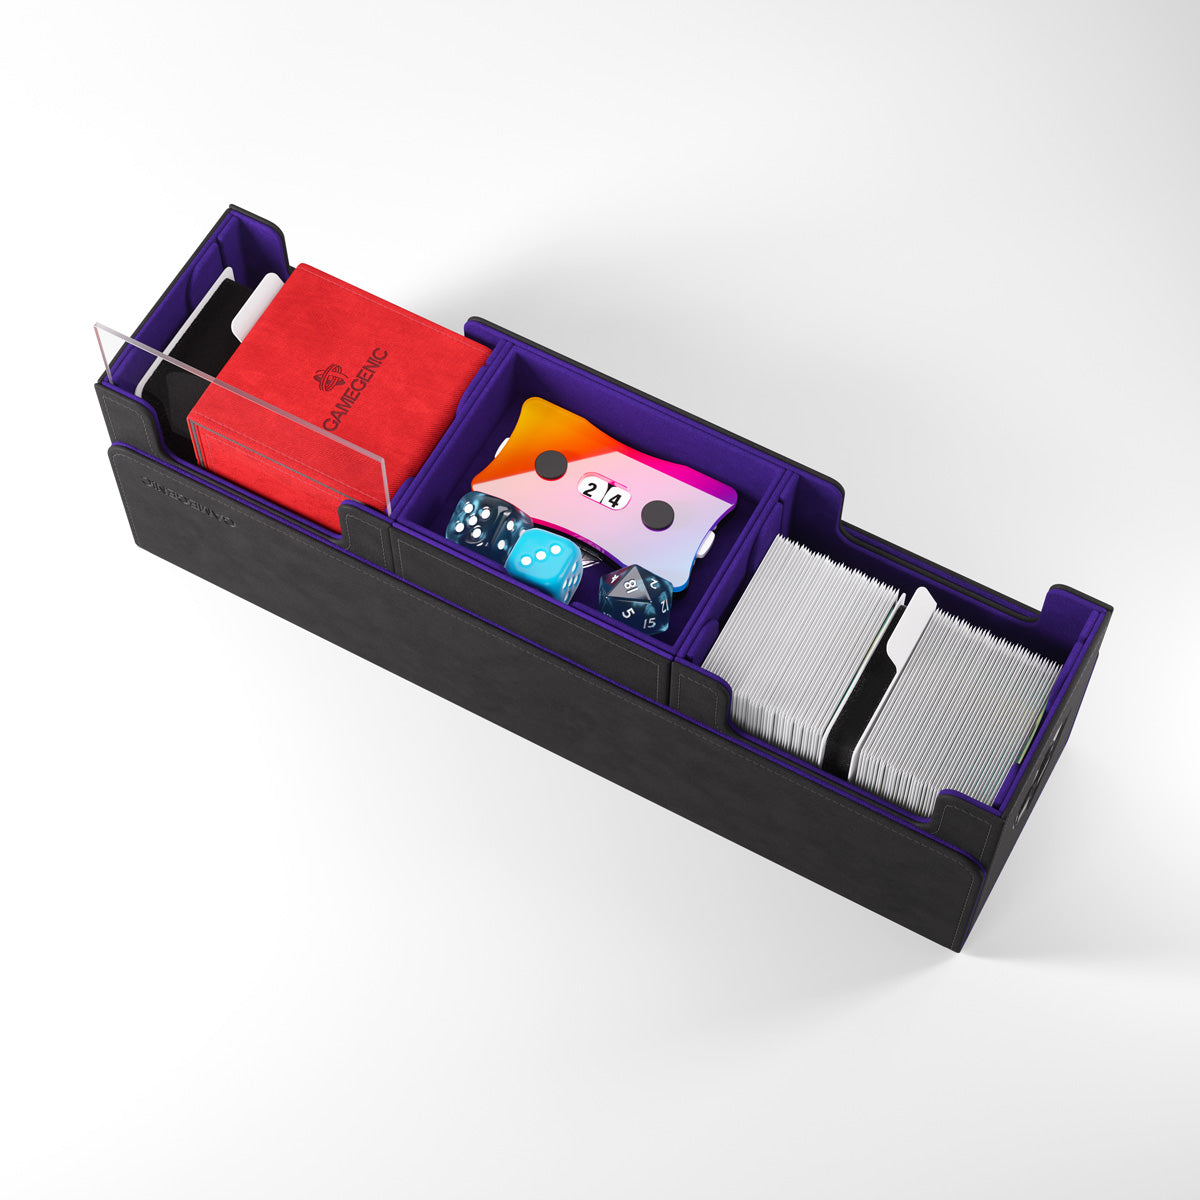 The Academic 266+ XL Convertible Black/Purple Deck Box (266ct)